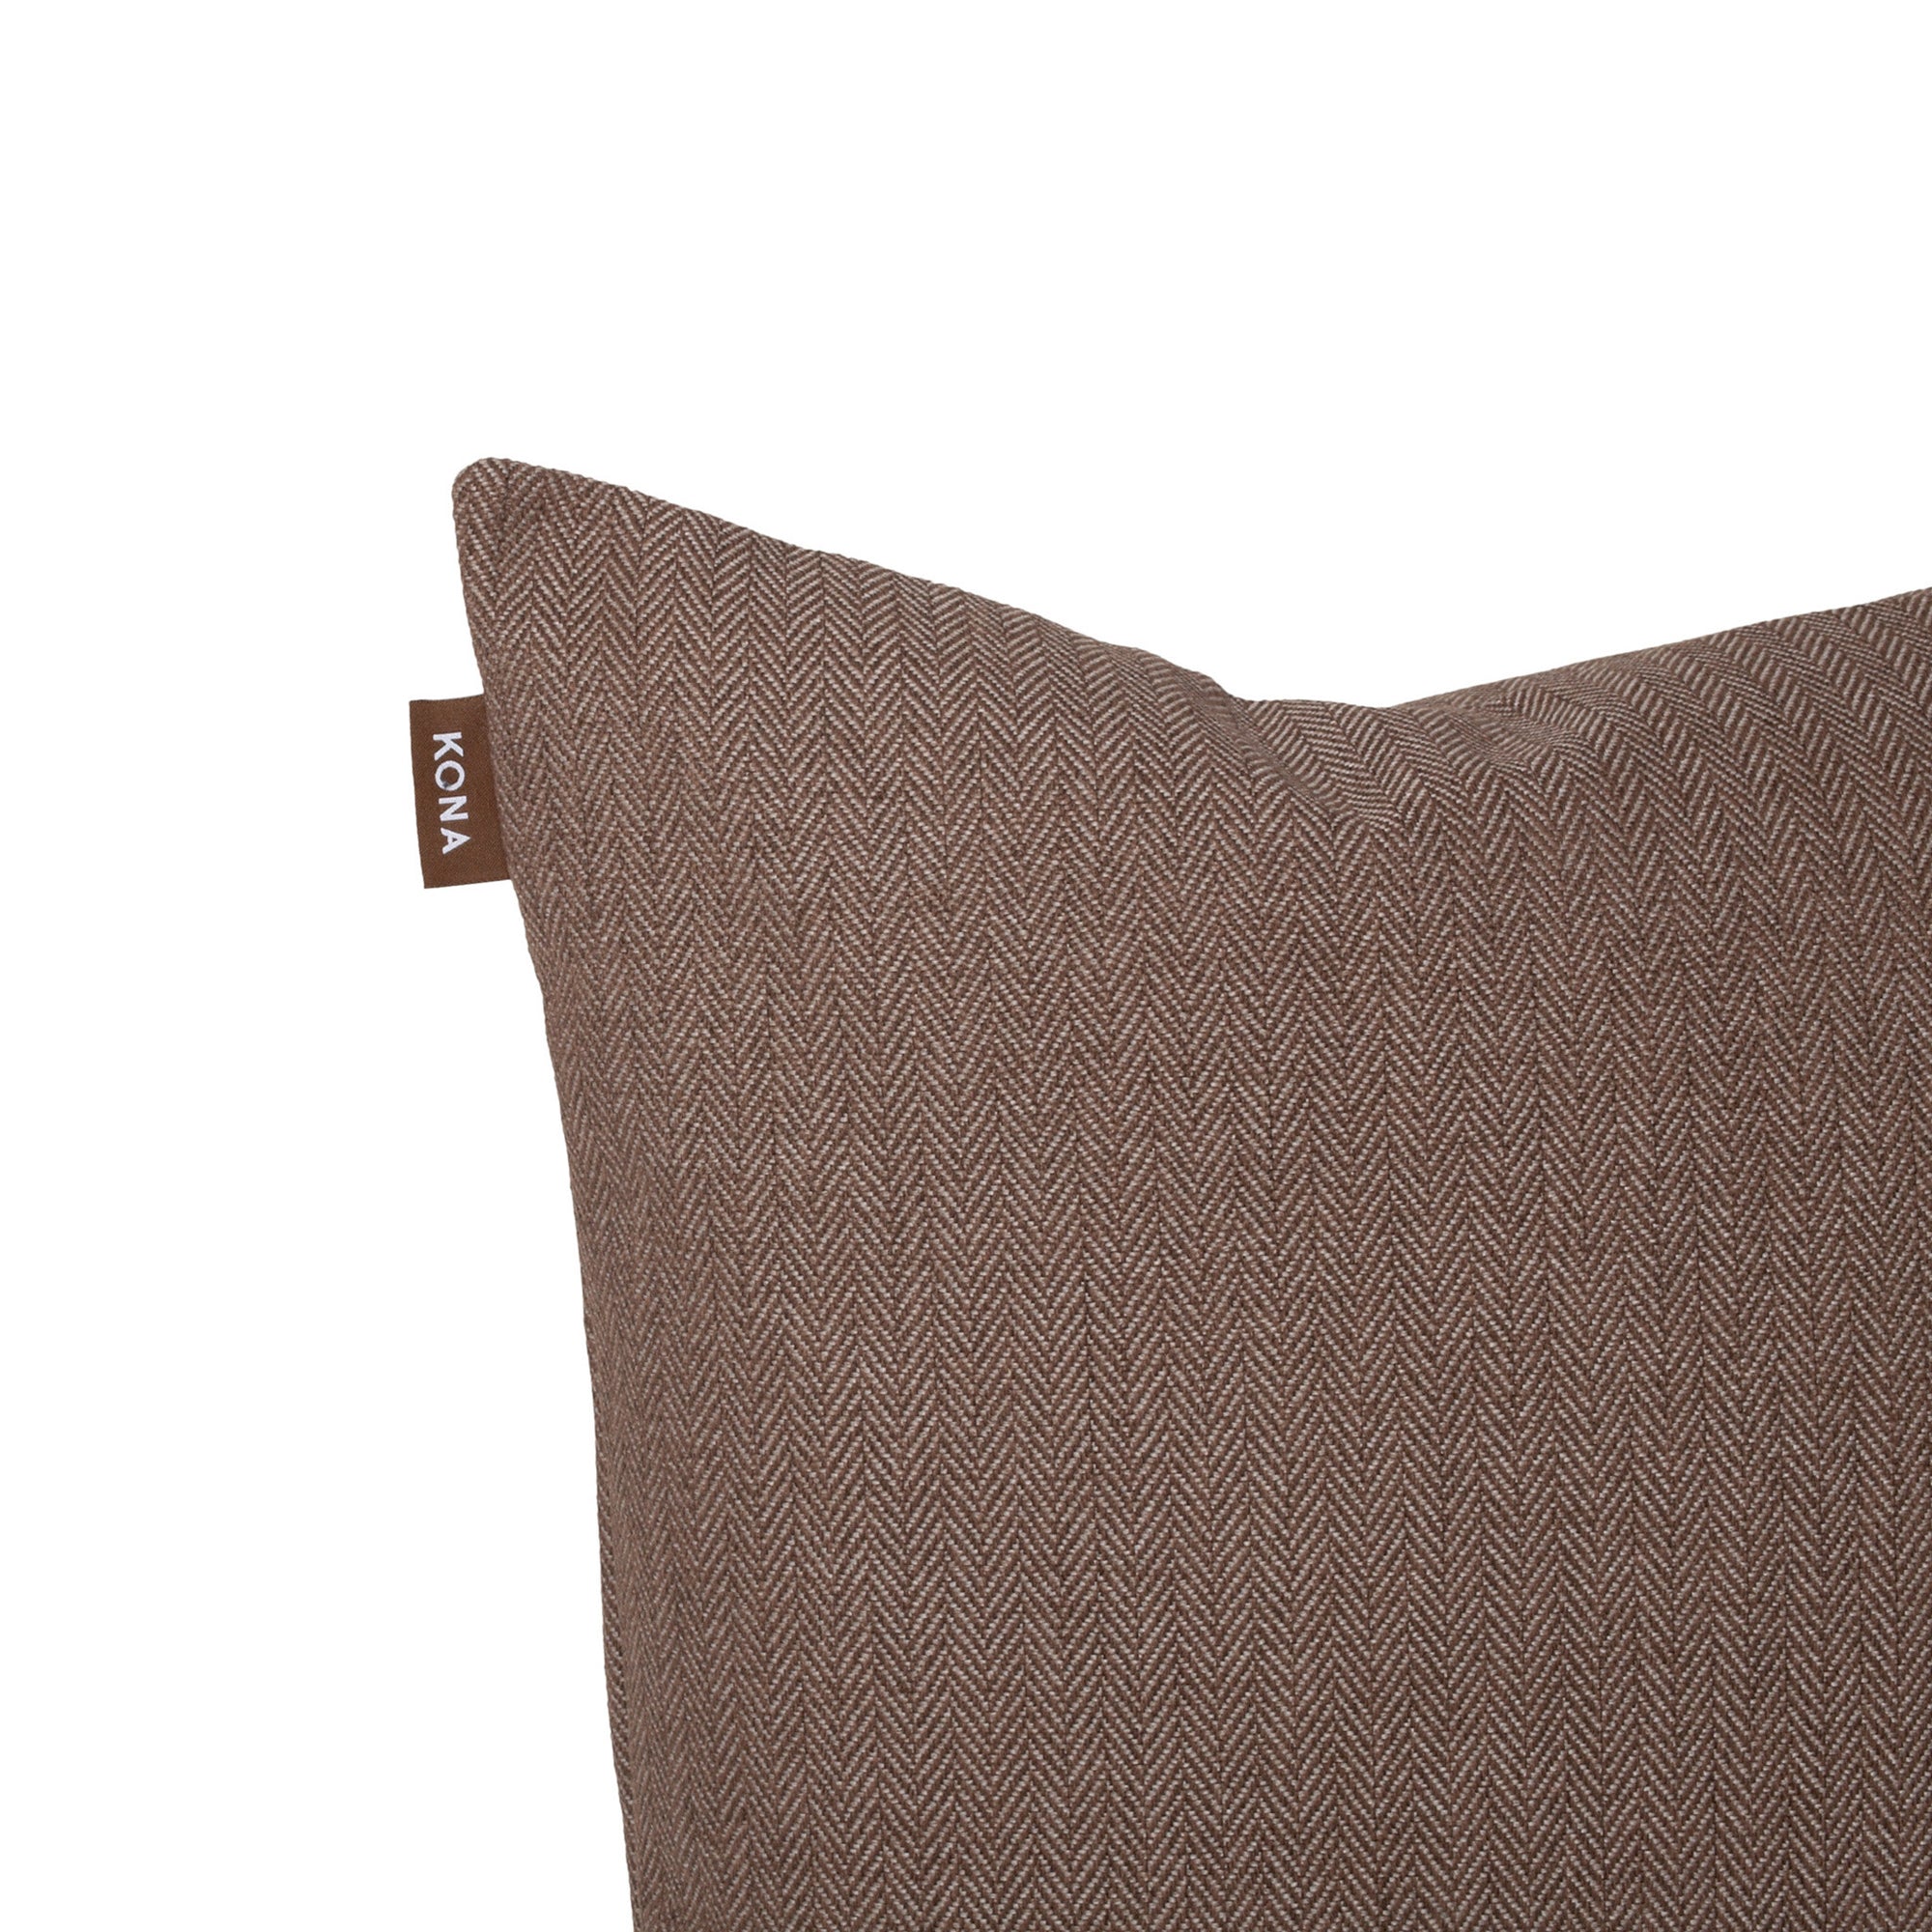 KONA CAVE® Decorative pillow covers, sophisticated brown herringbone fabric. 